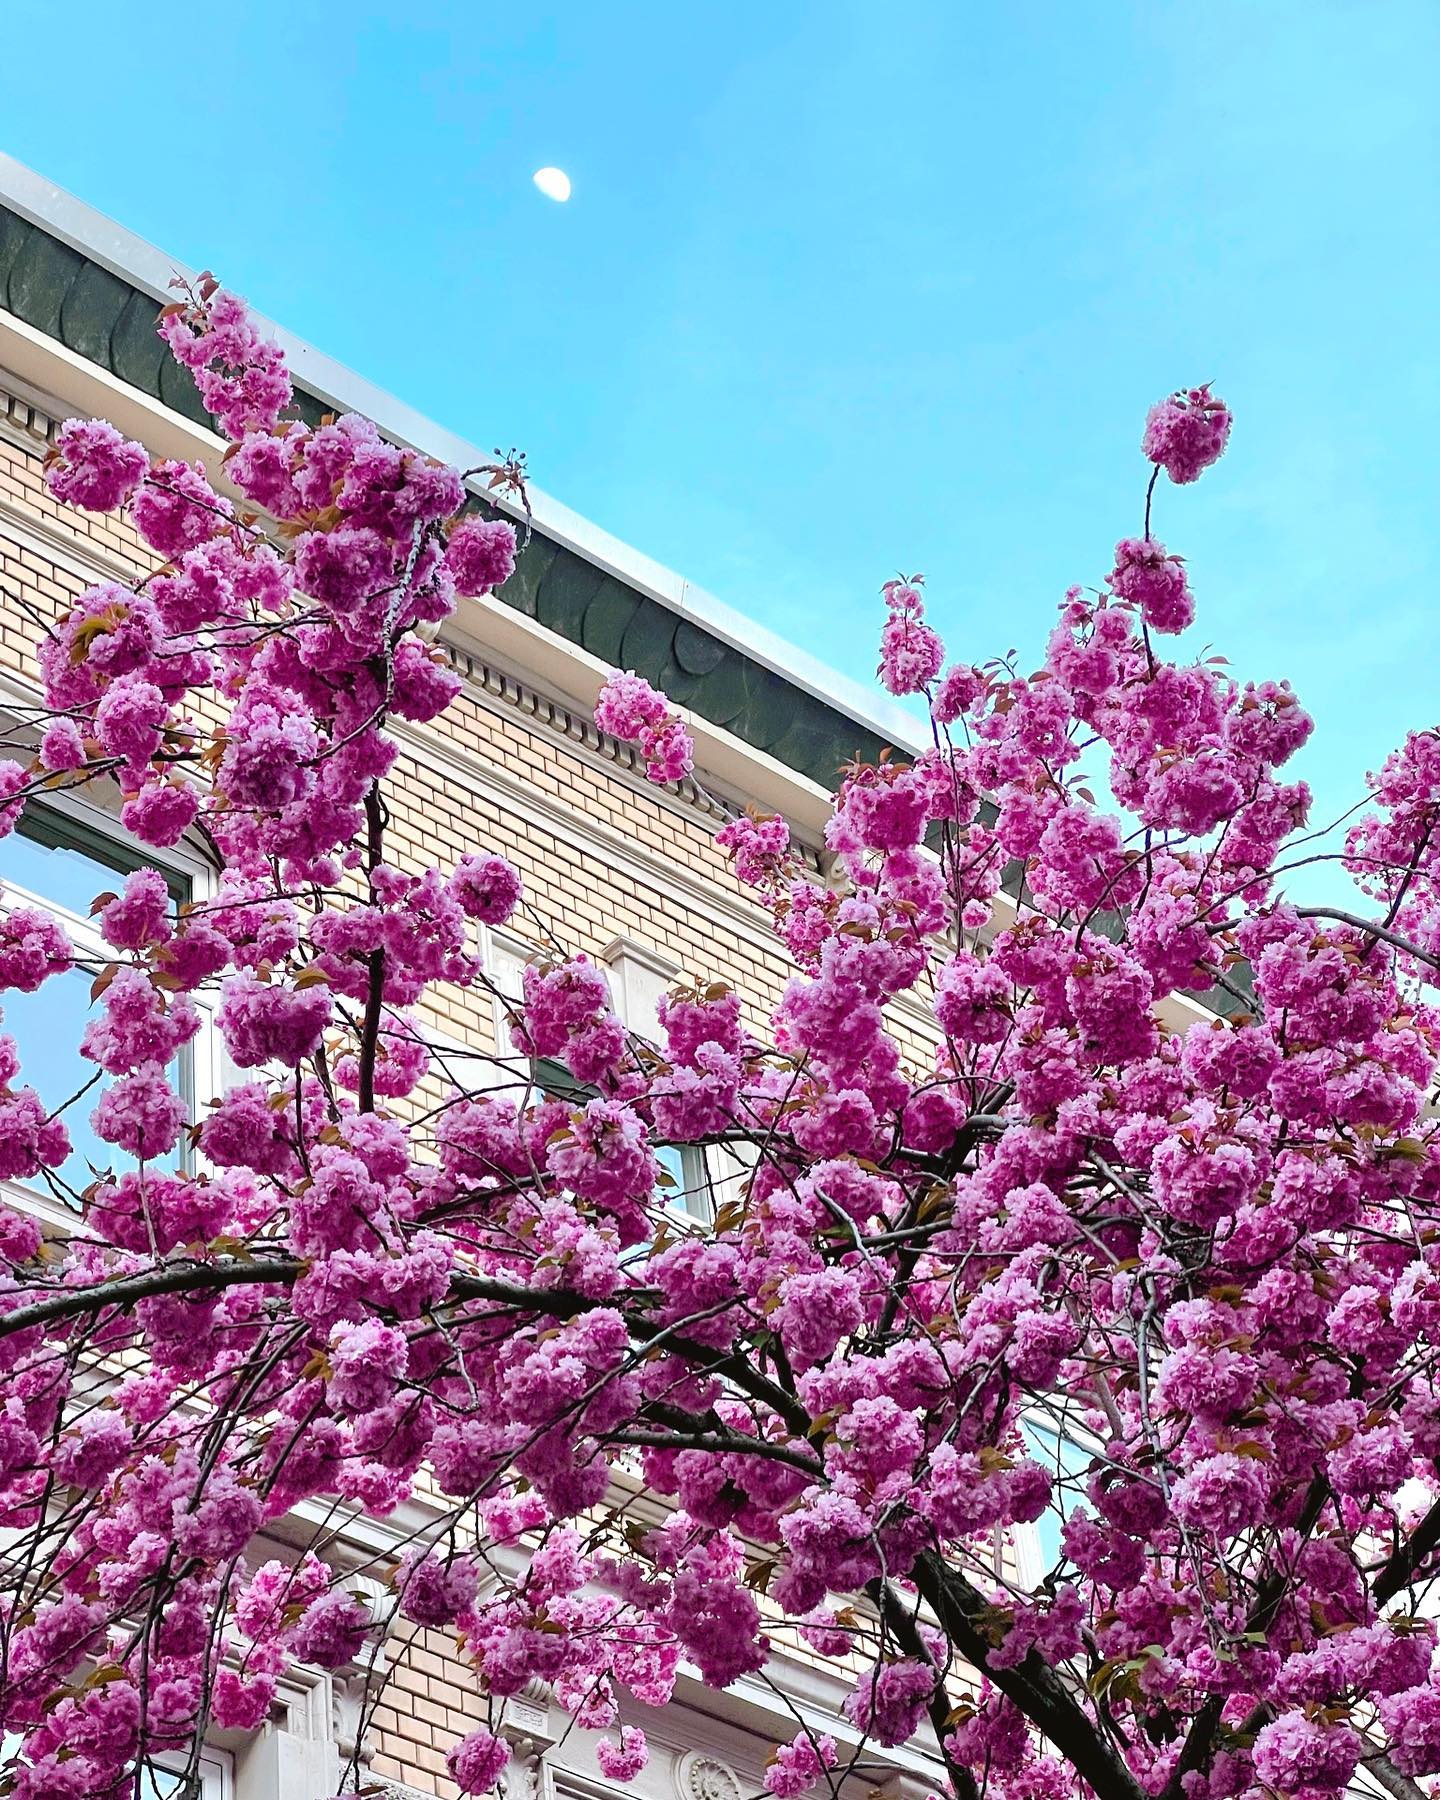 Cherry blossoms Bonn. Amazing. Each year. 
#cherryblossom #kirschblütebonn #cherryblossomtree #kibo #bonn #beethoven #japancherryblossom #altstadtbonn #kirschblüte #nikonz6ii #pinkblossoms #pinkblossomsgermany #wdr #rhein #insta